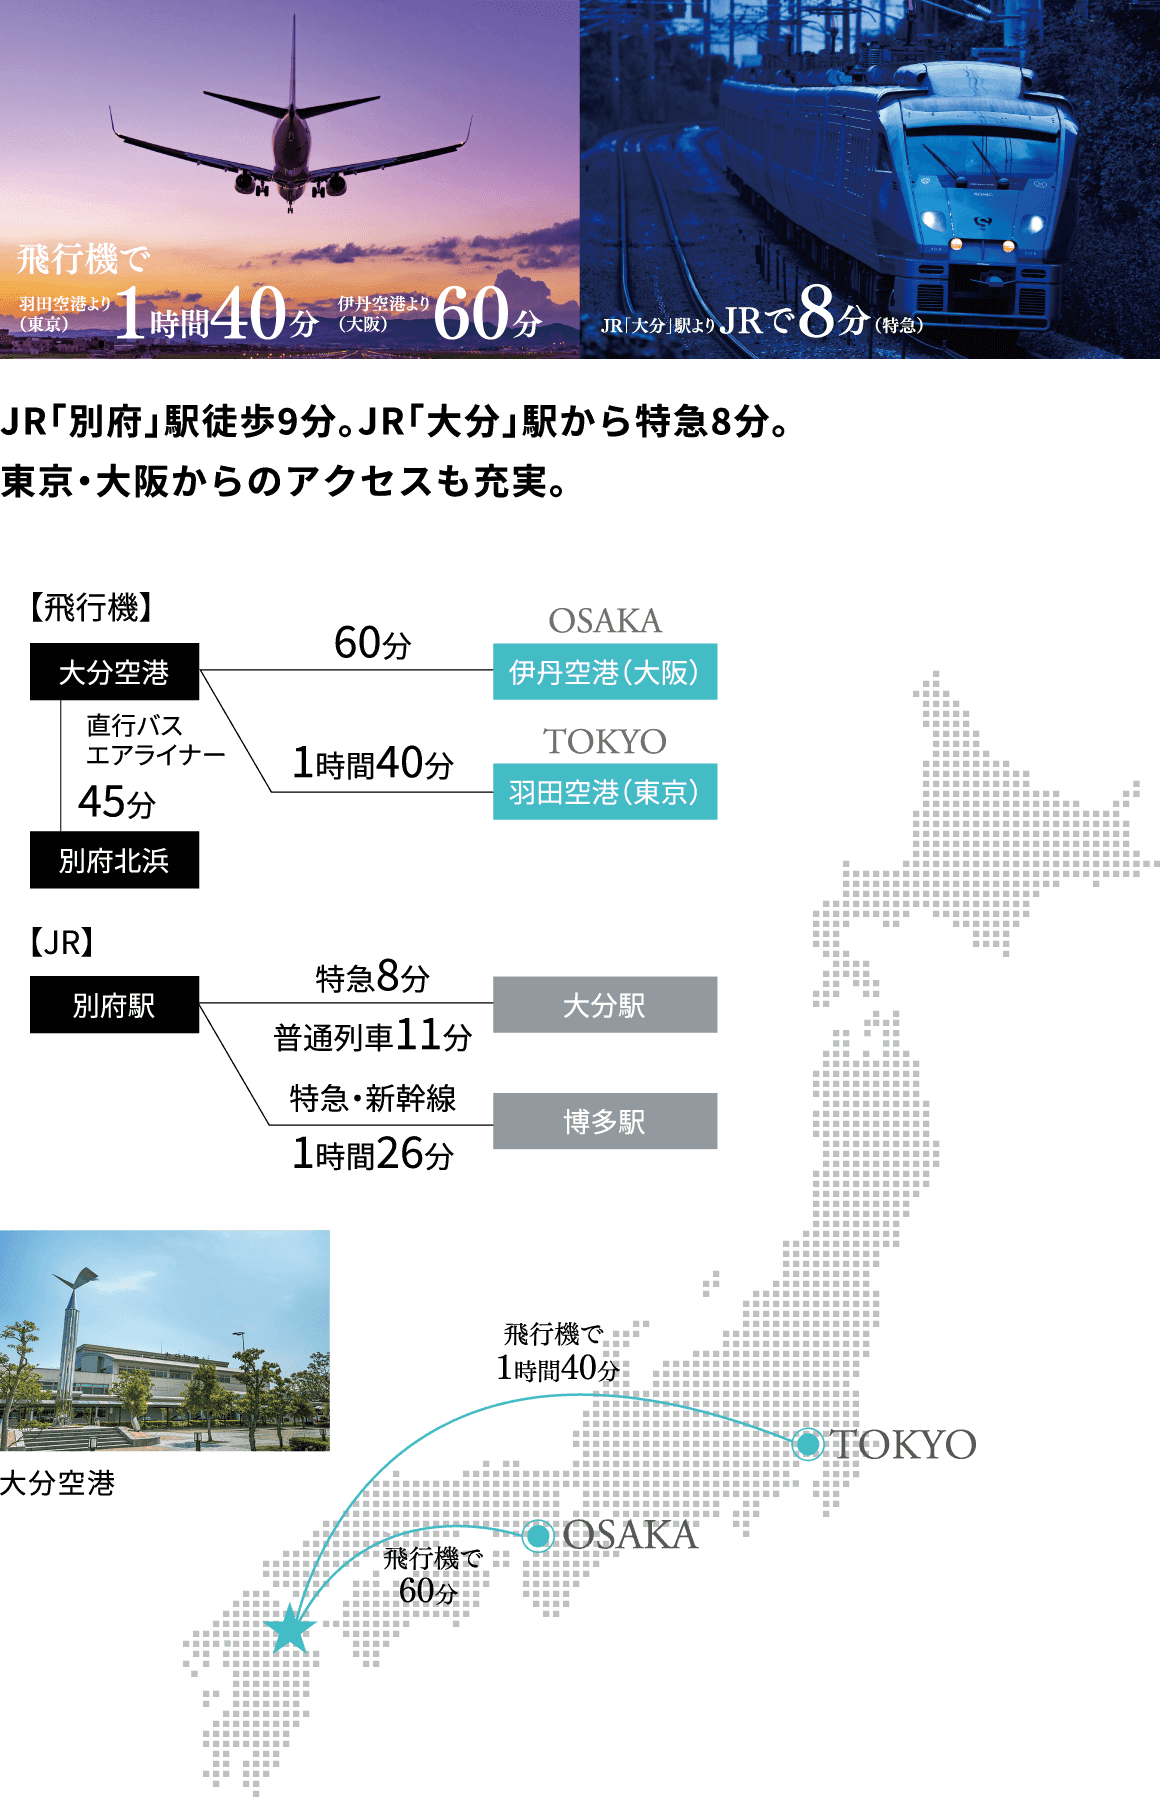 JR「別府」駅徒歩9分。JR「大分」駅から特急8分。東京･大阪からのアクセスも充実。